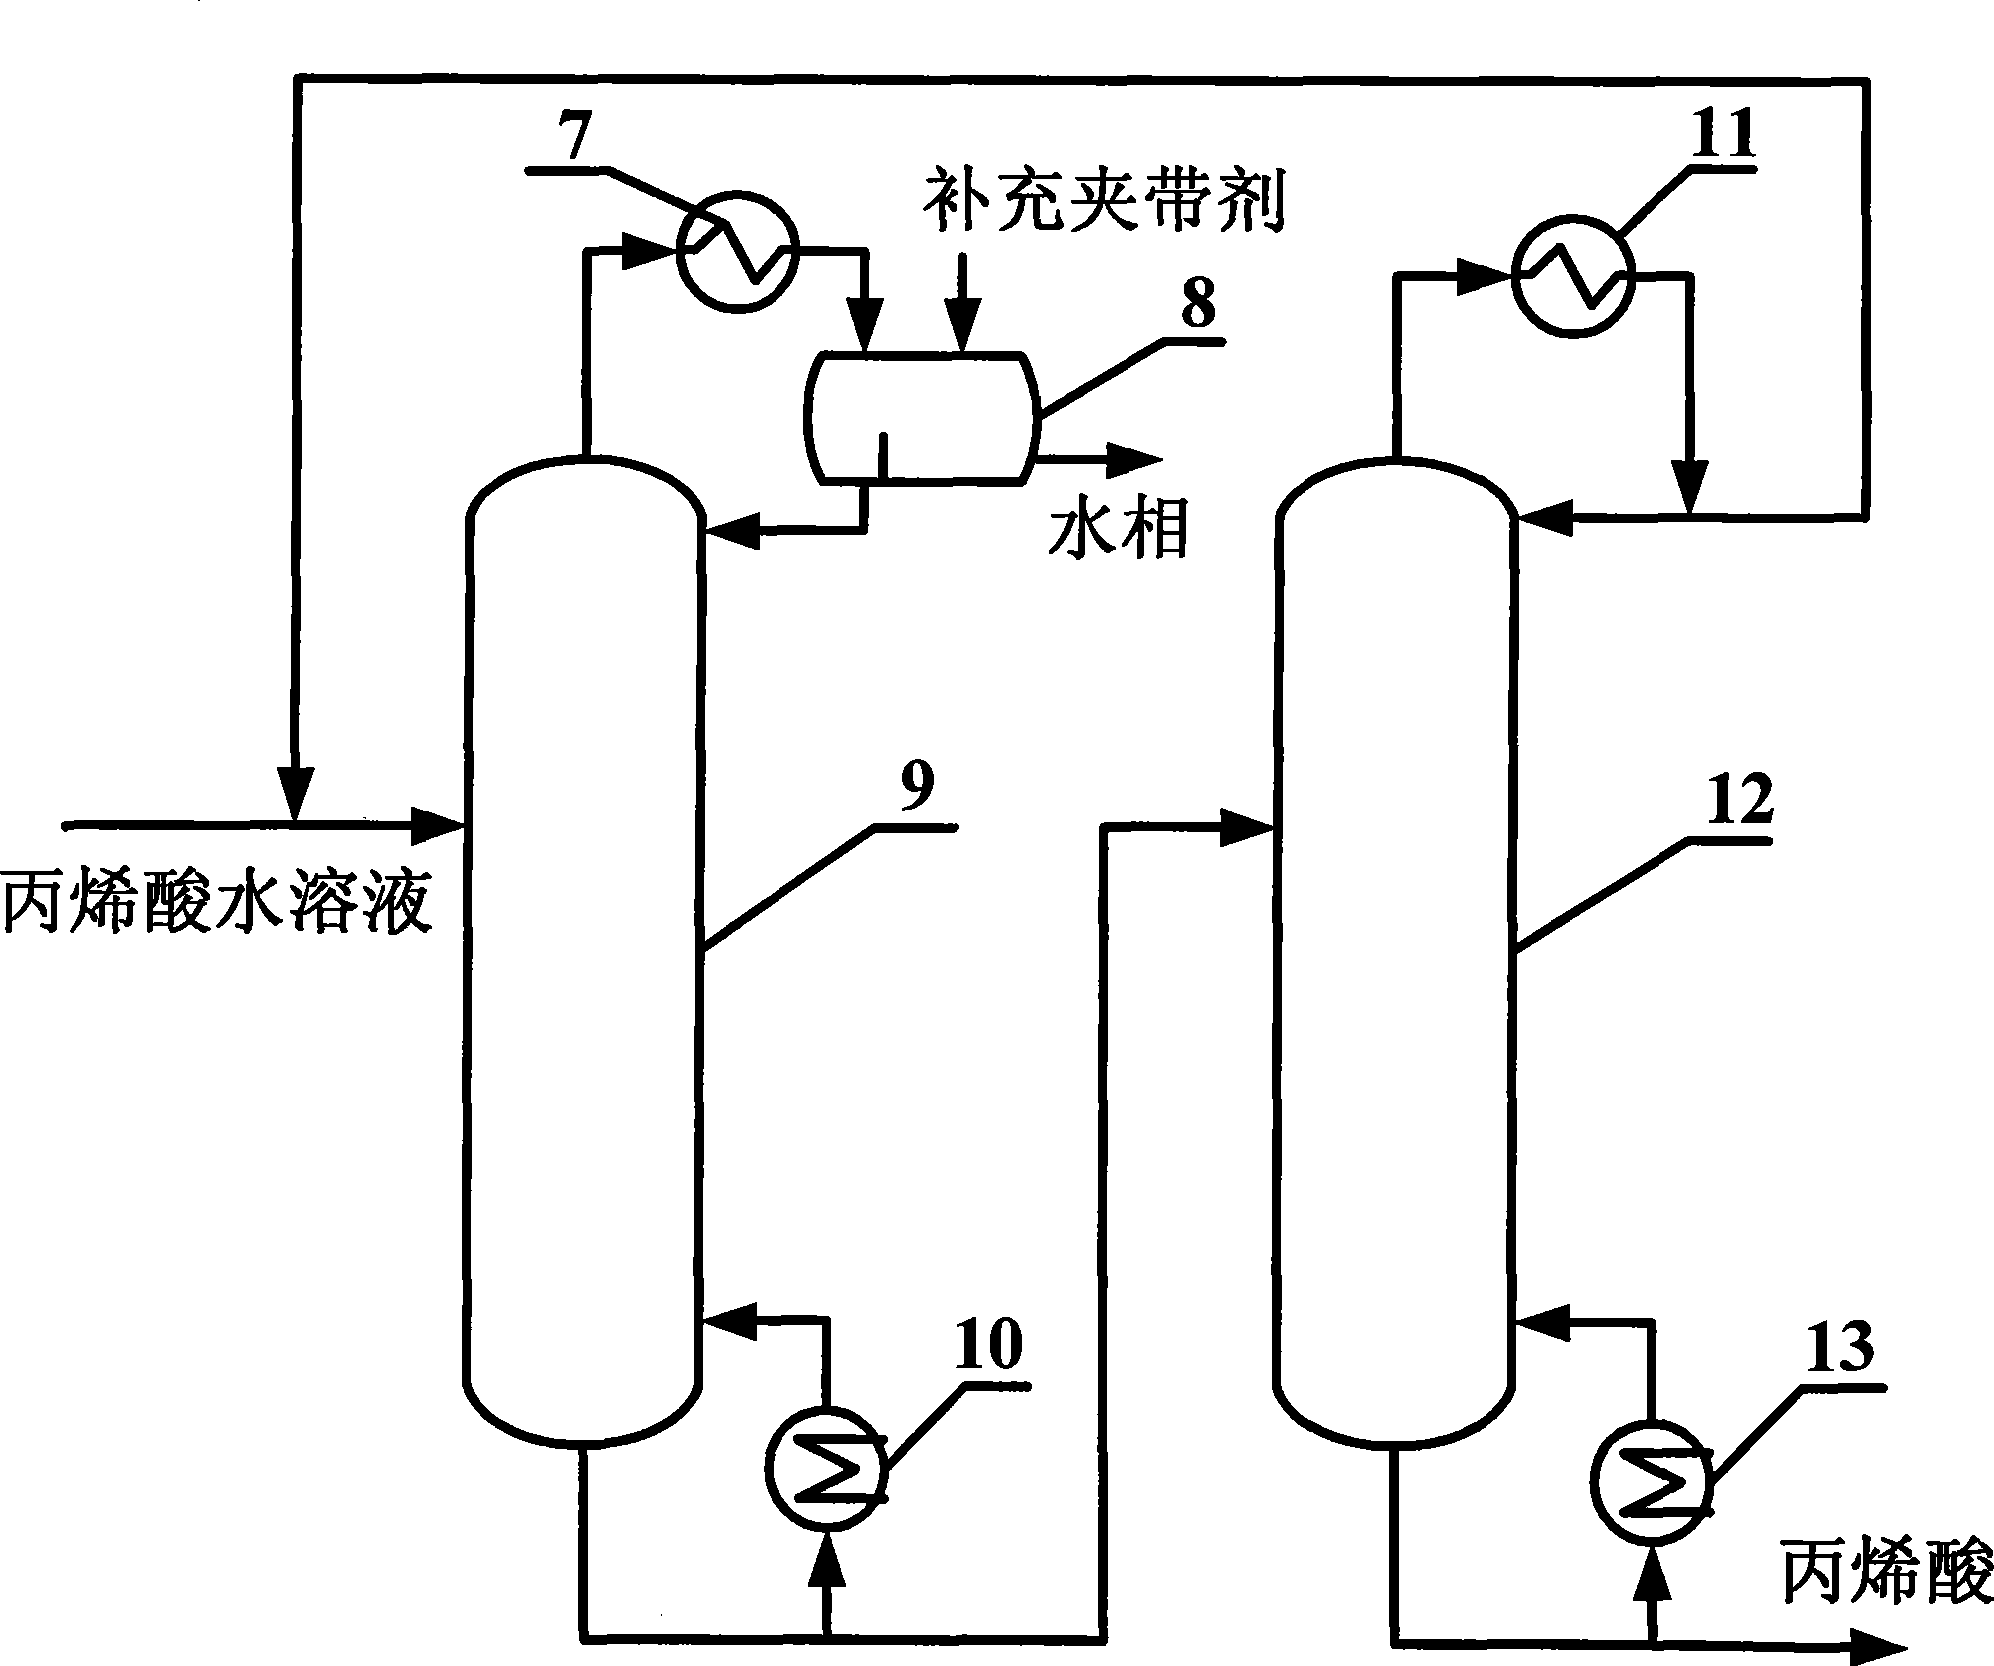 Acrylic purification process and apparatus of bulkhead azeotropy rectification column